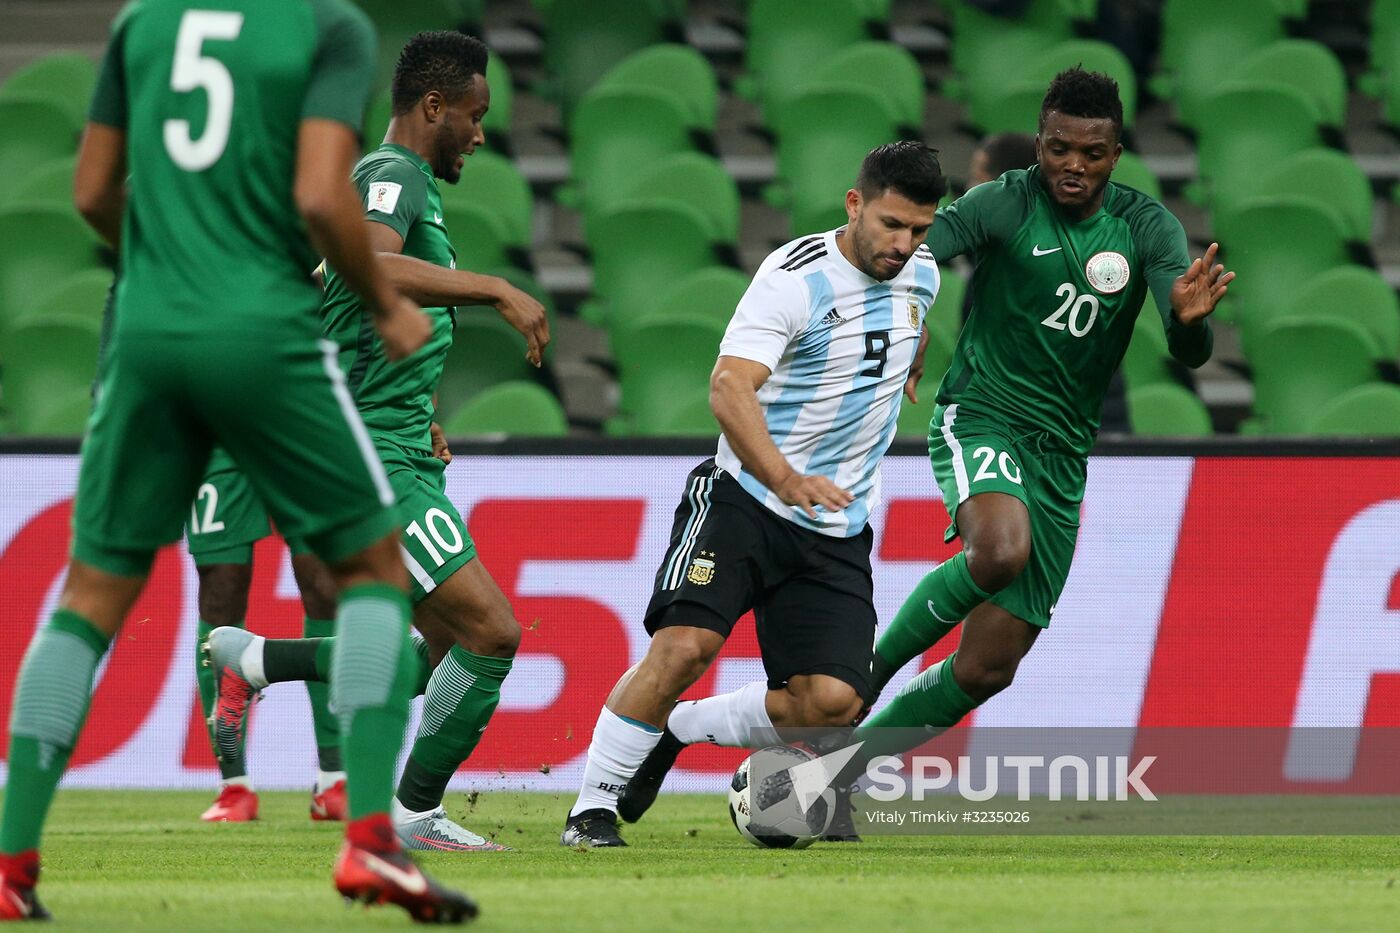 Football friendly Argentine vs. Nigeria